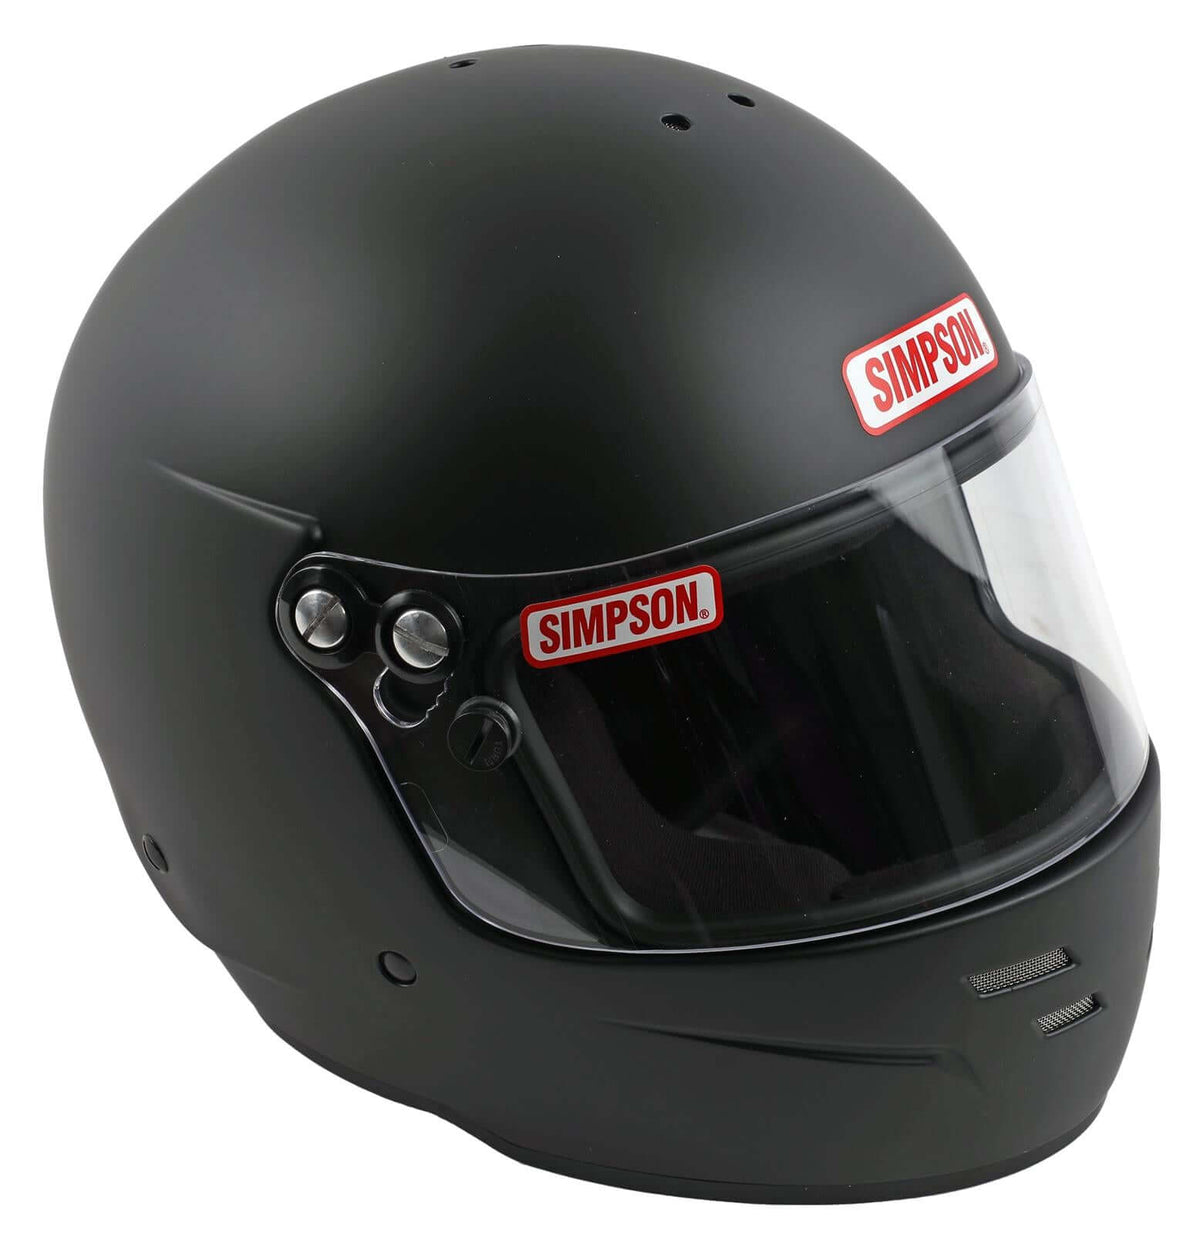 Viper Series Helmet - $432.95